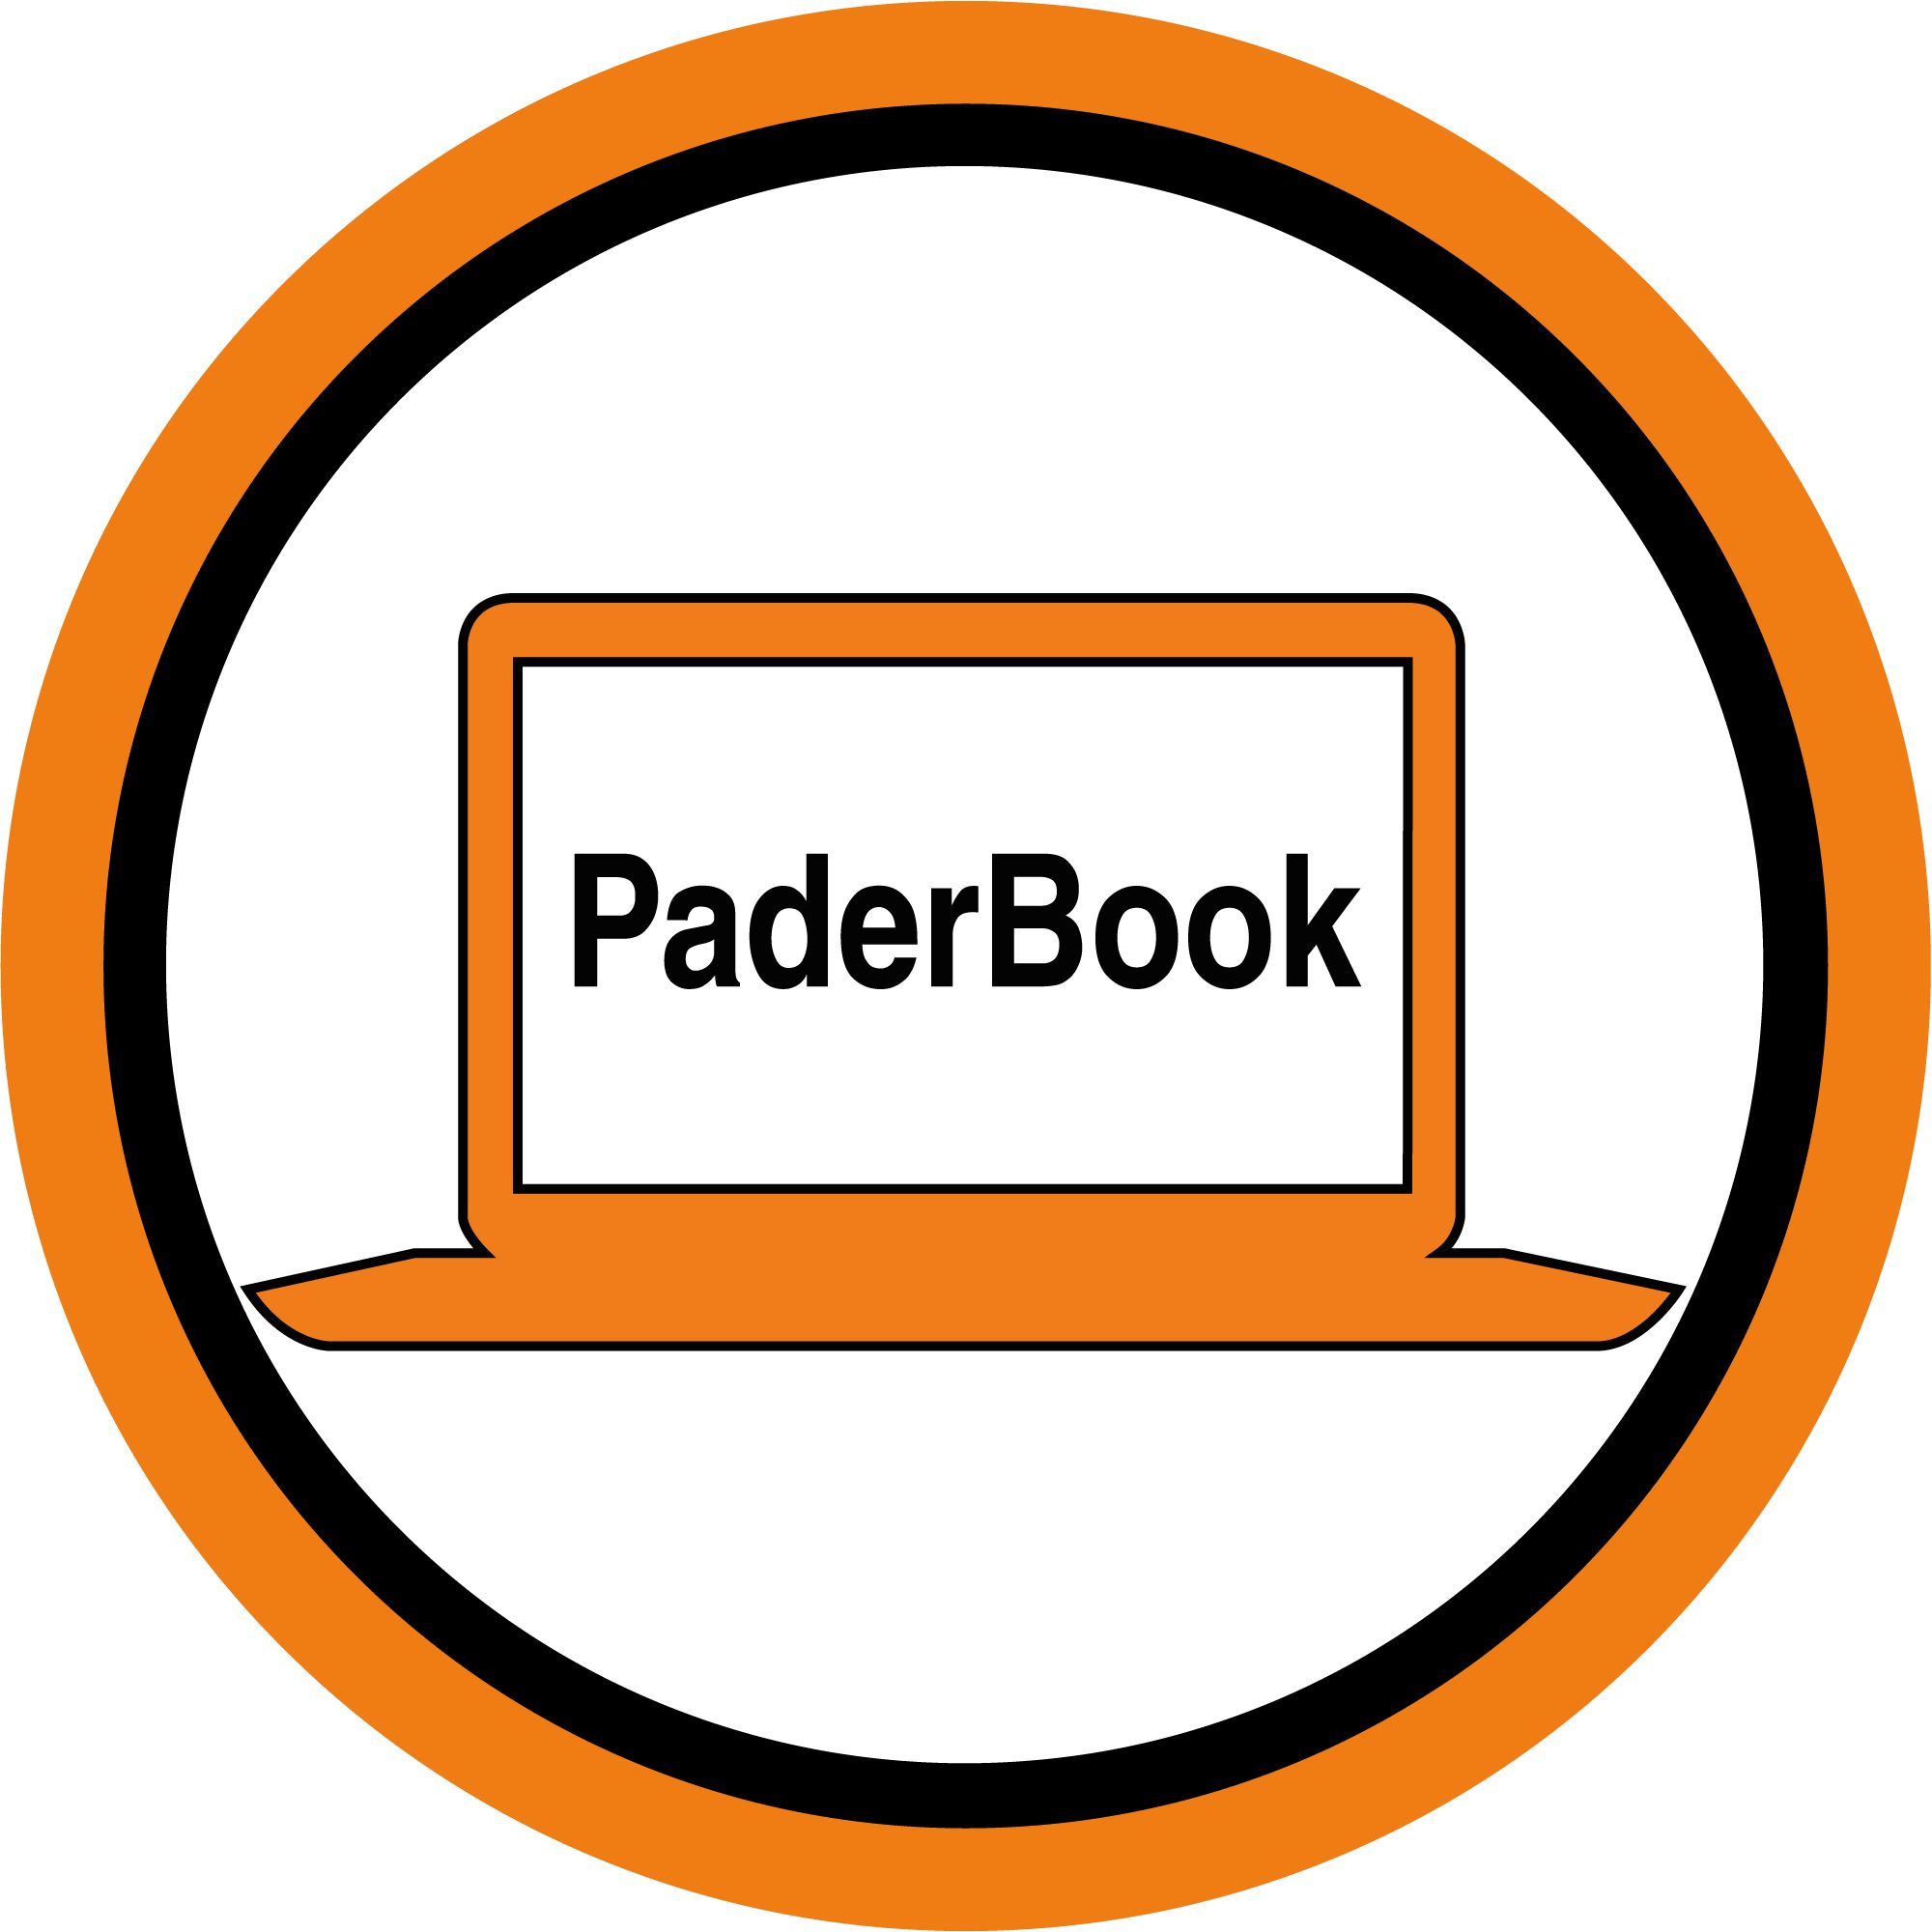 PaderBook